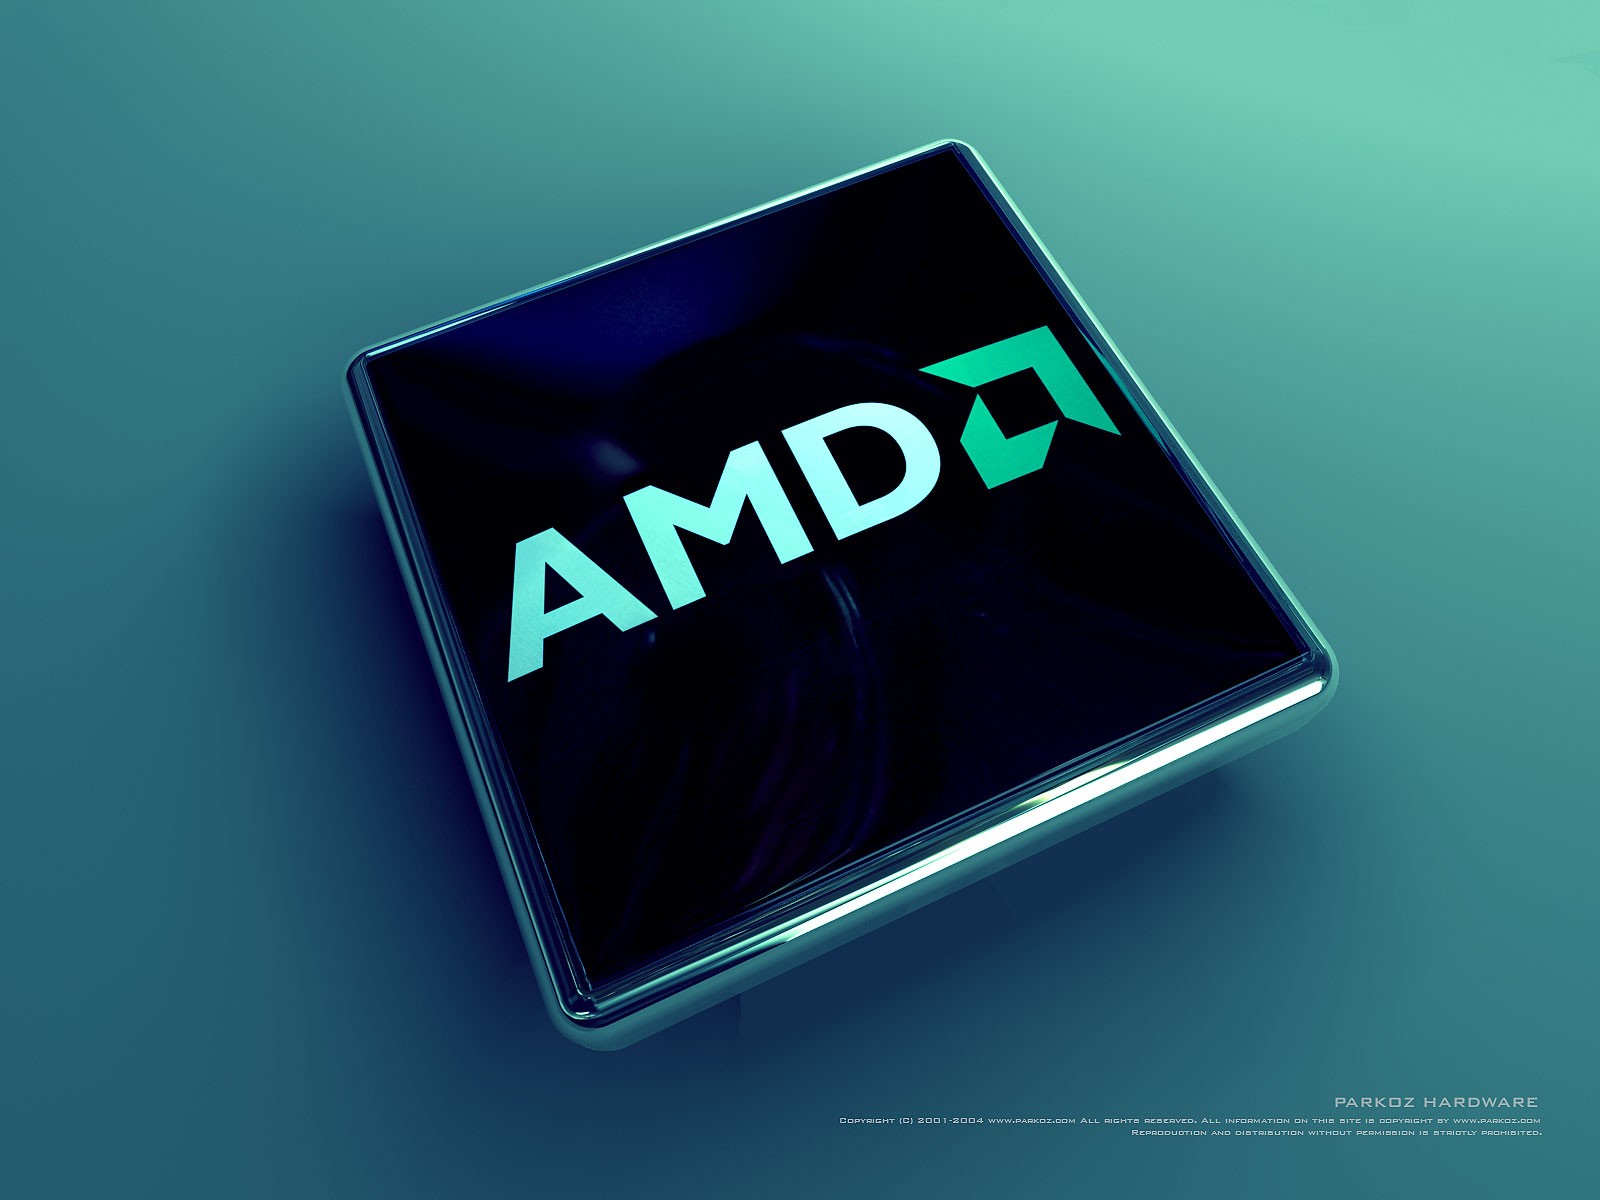 AMD-amd-1600x1200.jpg